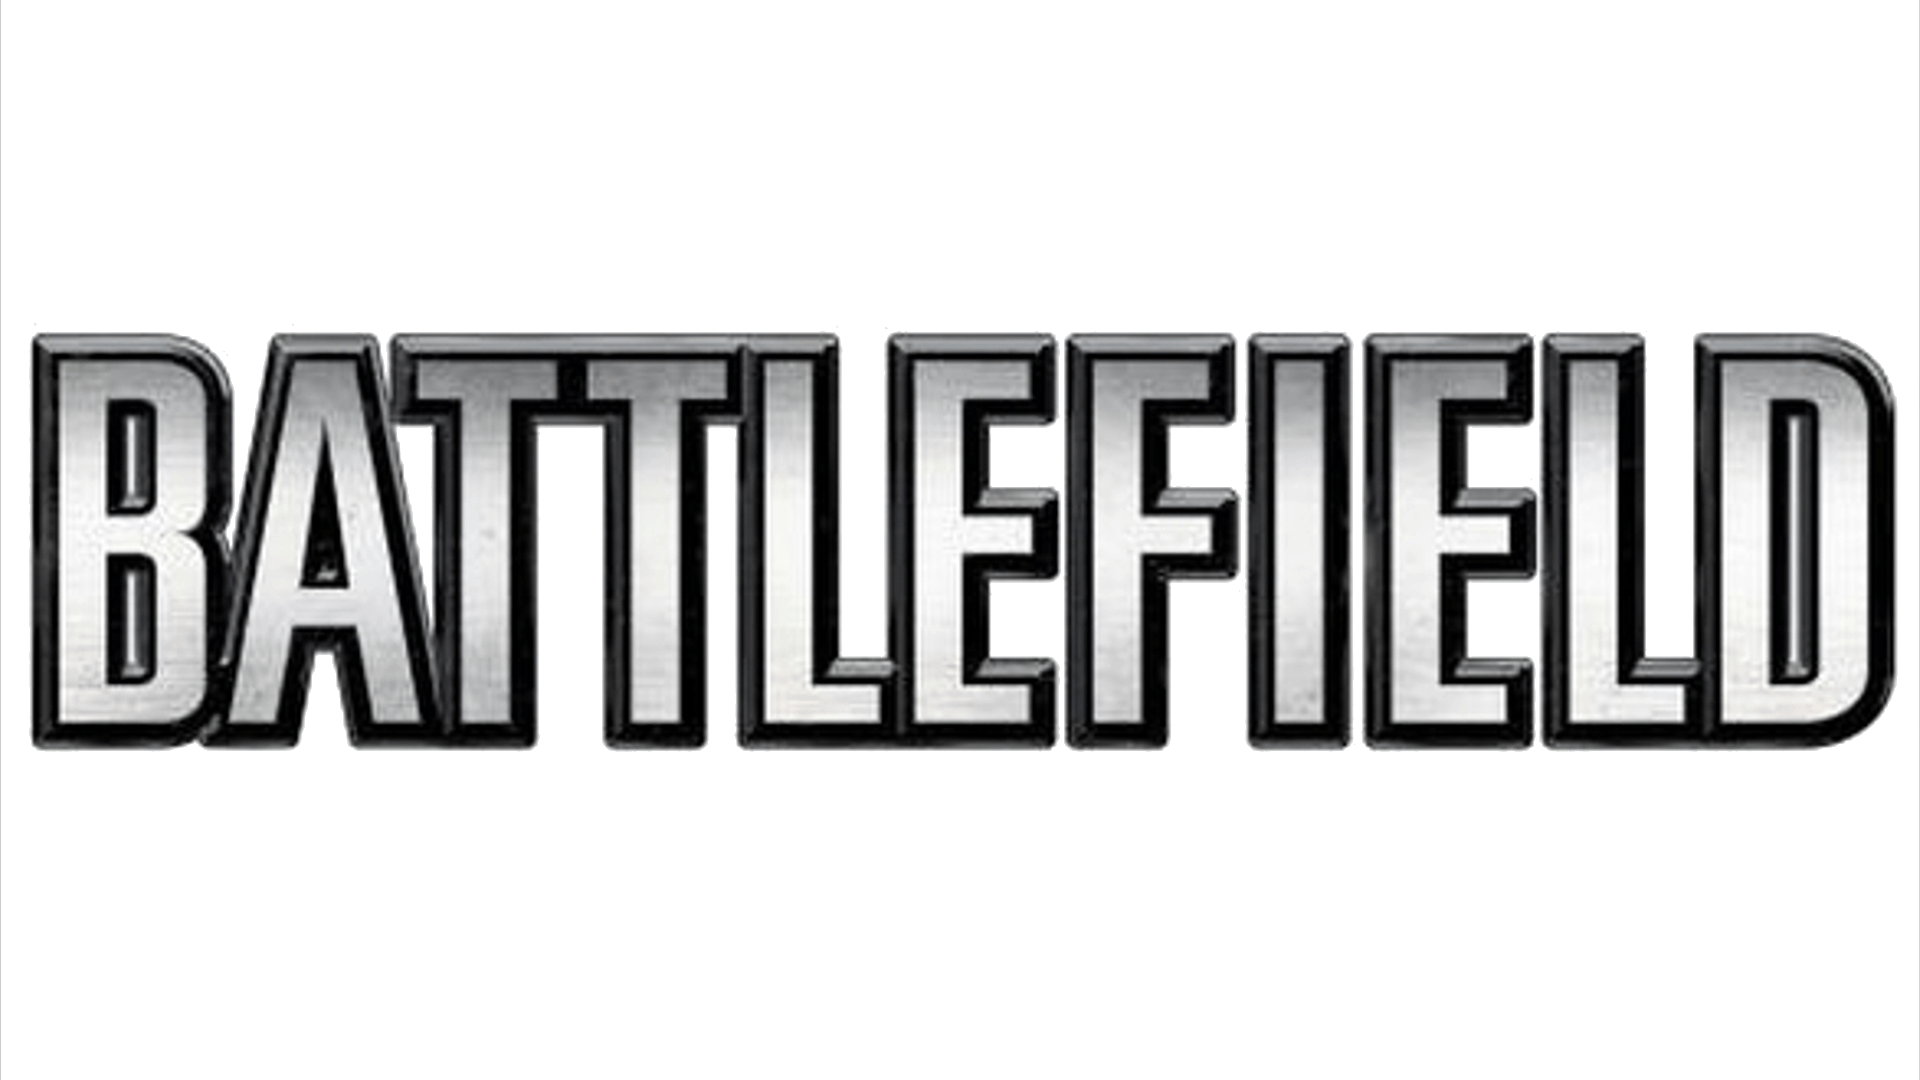 Battlefield Logo - Battlefield PNG images free download